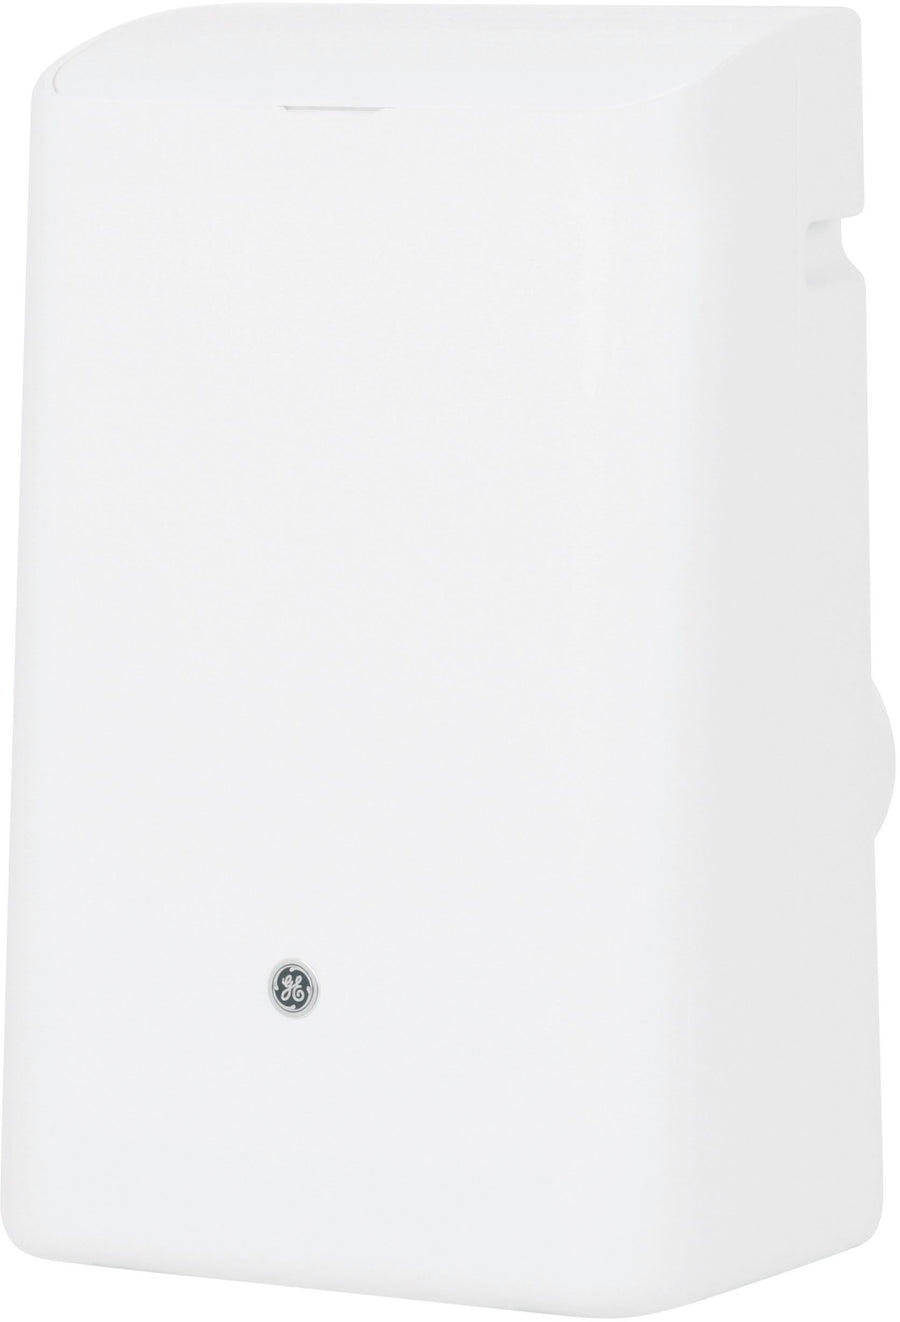 GE - 450 Sq. Ft. 10400 BTU Smart Portable Air Conditioner - White_0